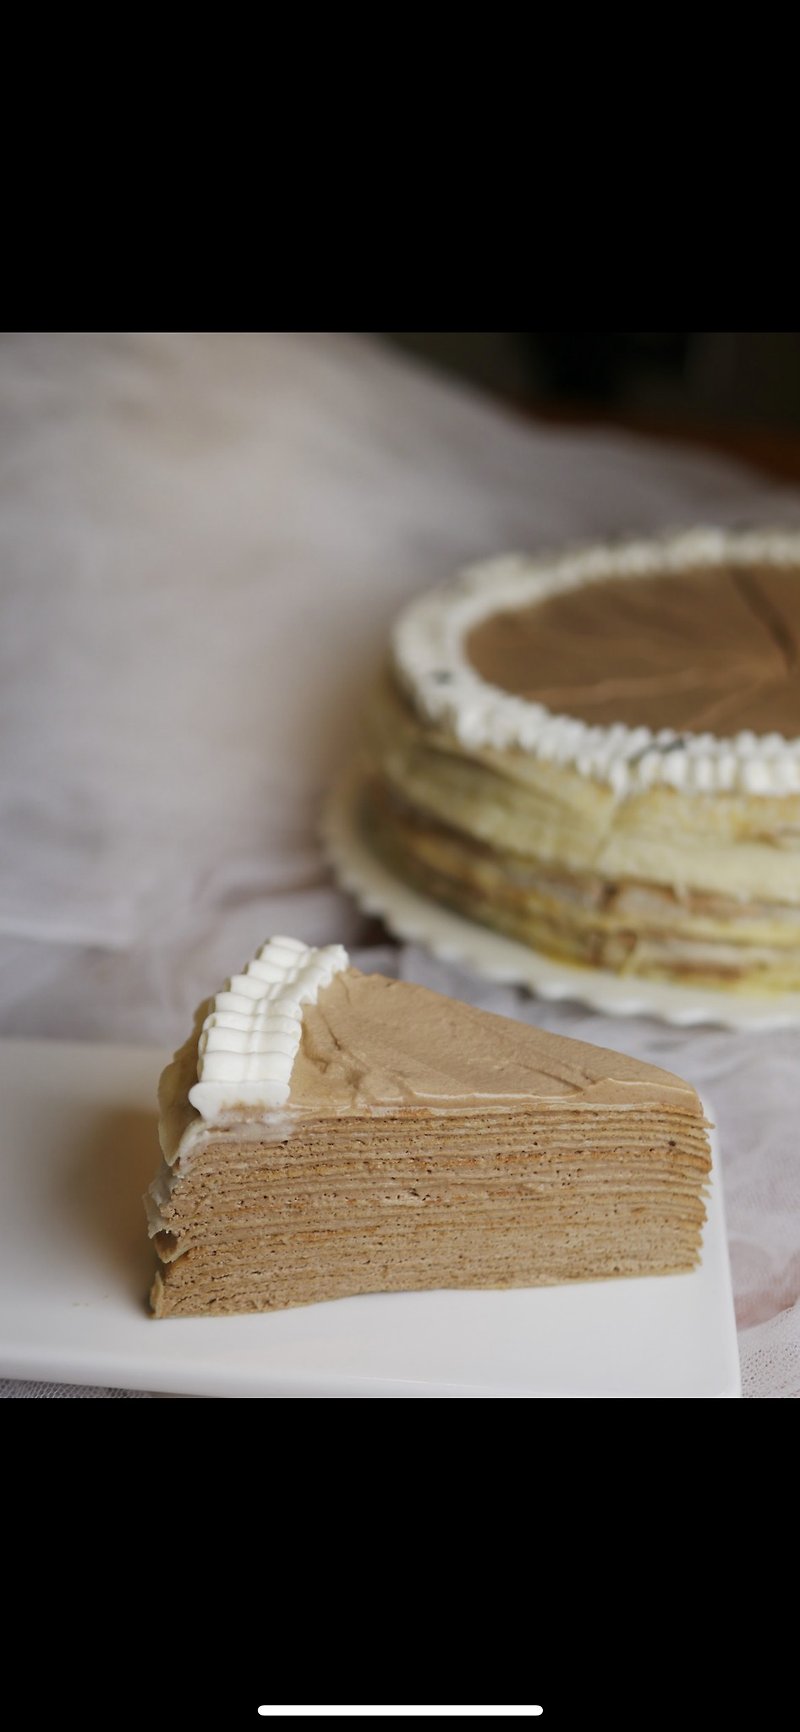 8 inch layer cake - เค้กและของหวาน - วัสดุอื่นๆ 